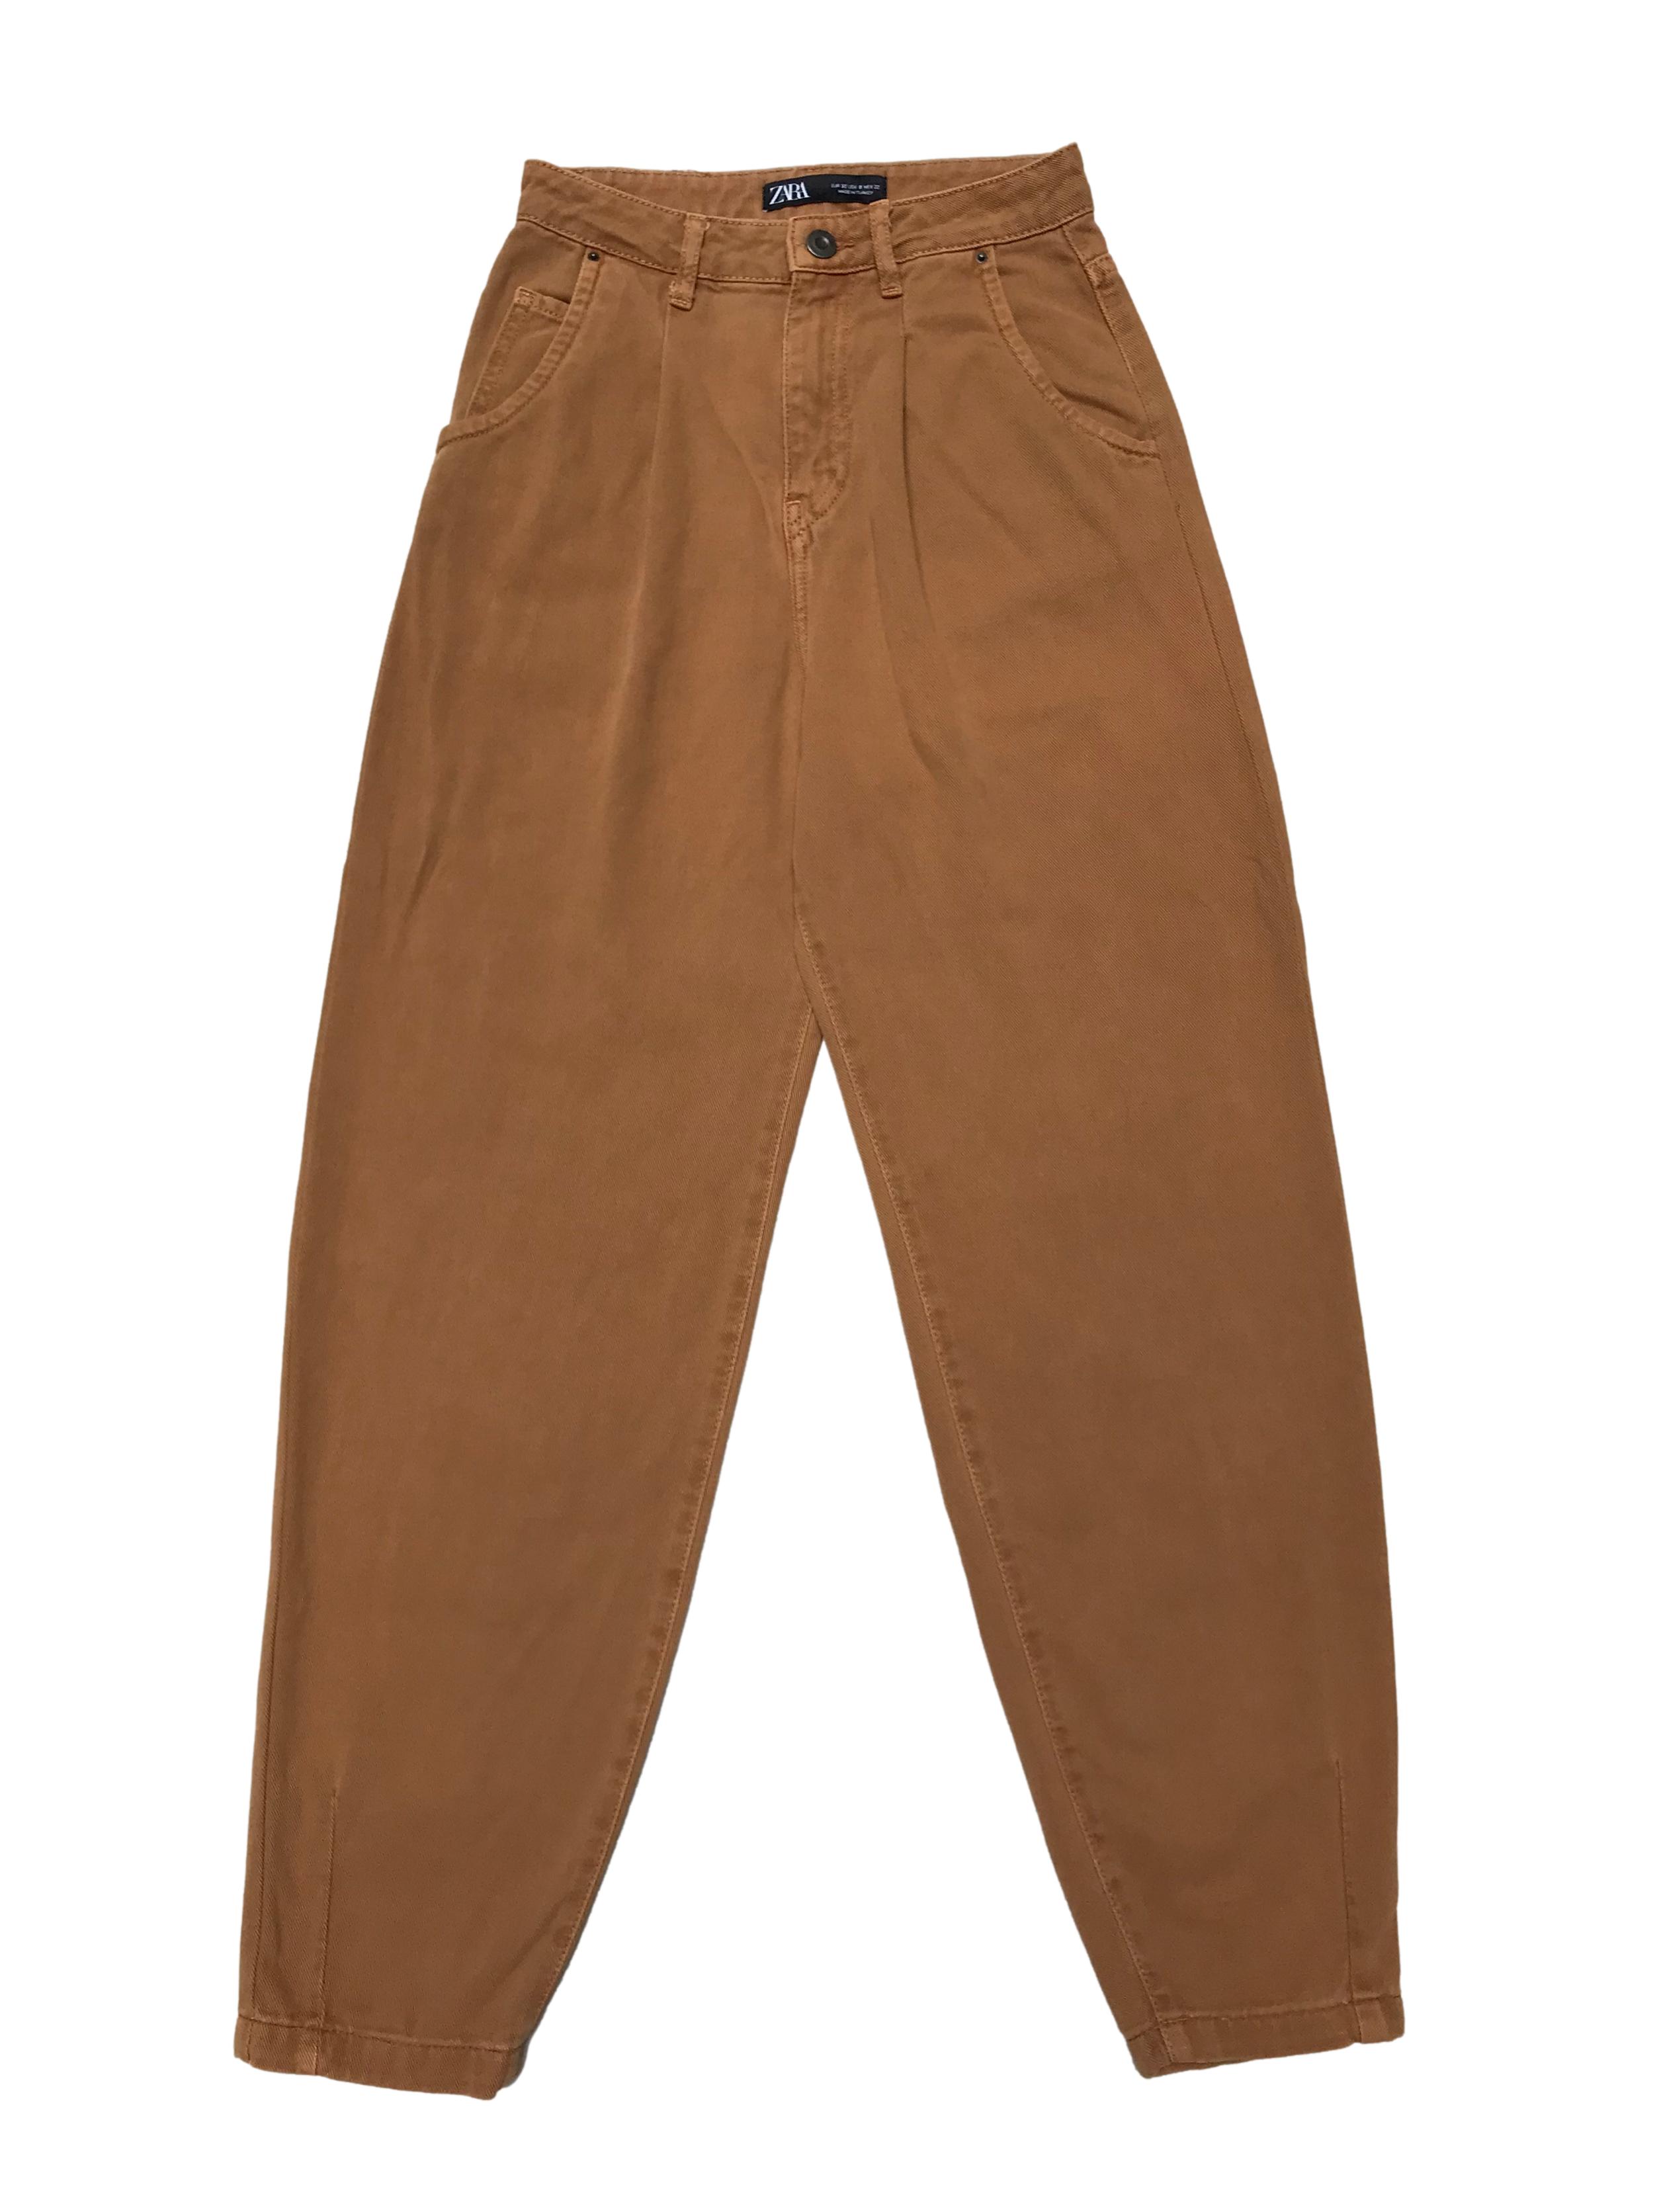 Slouchy jean Zara 100% algodón camel, tiro alto, modelo five pockets. Cintura 62cm Cadera 90cm Largo 98cm